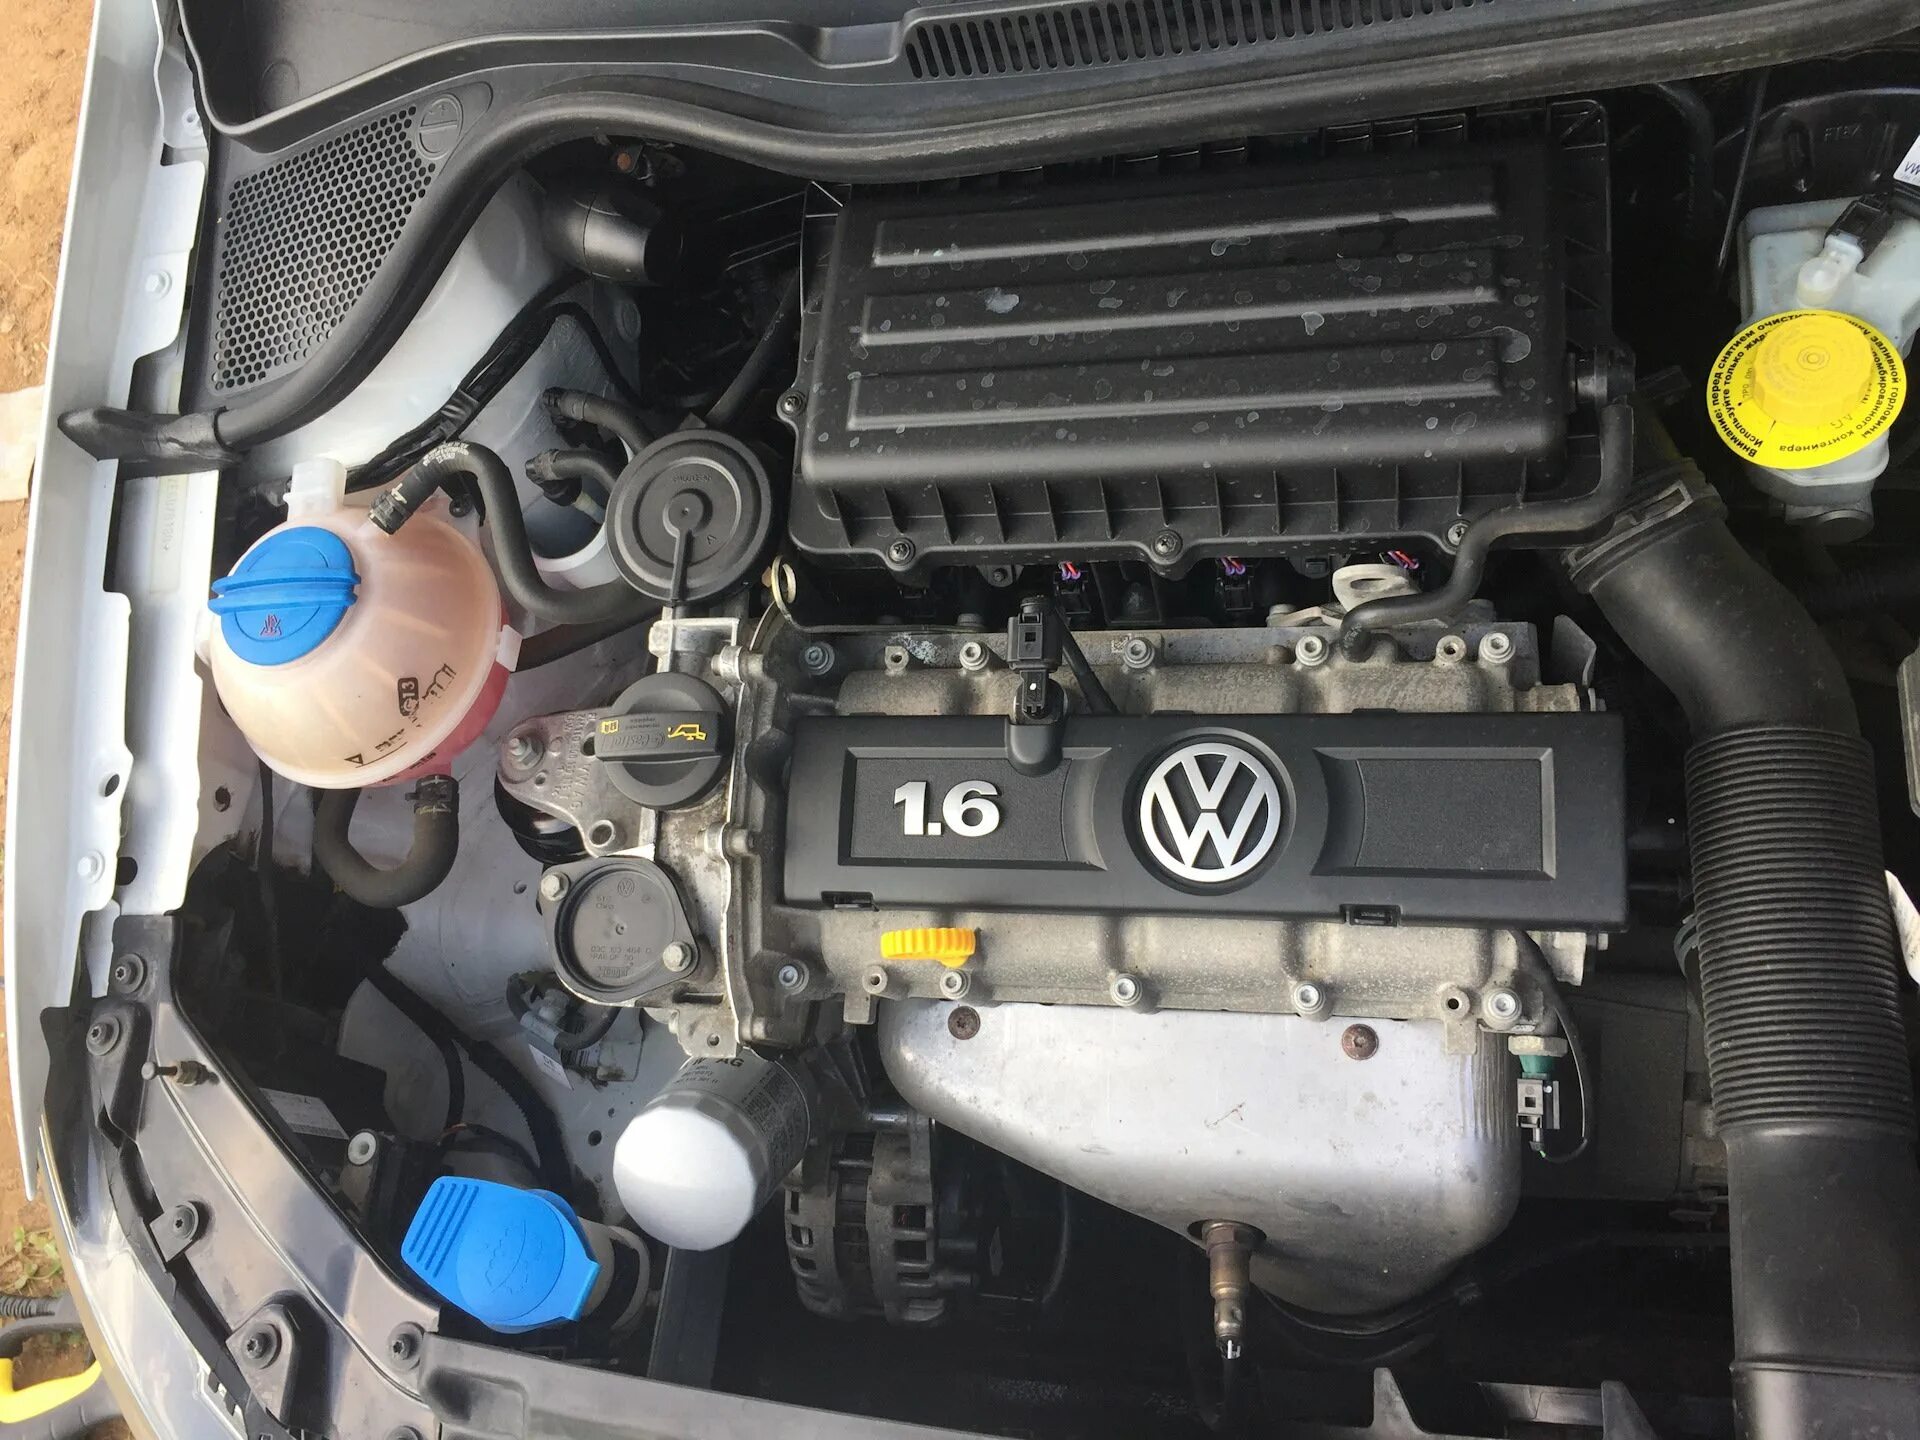 Volkswagen polo 1.6 двигателя. Мотор поло седан 1.6. Двигатель Volkswagen Polo sedan 1.6. Мотор Фольксваген поло седан 1.6. Двигатель поло седан 2011.